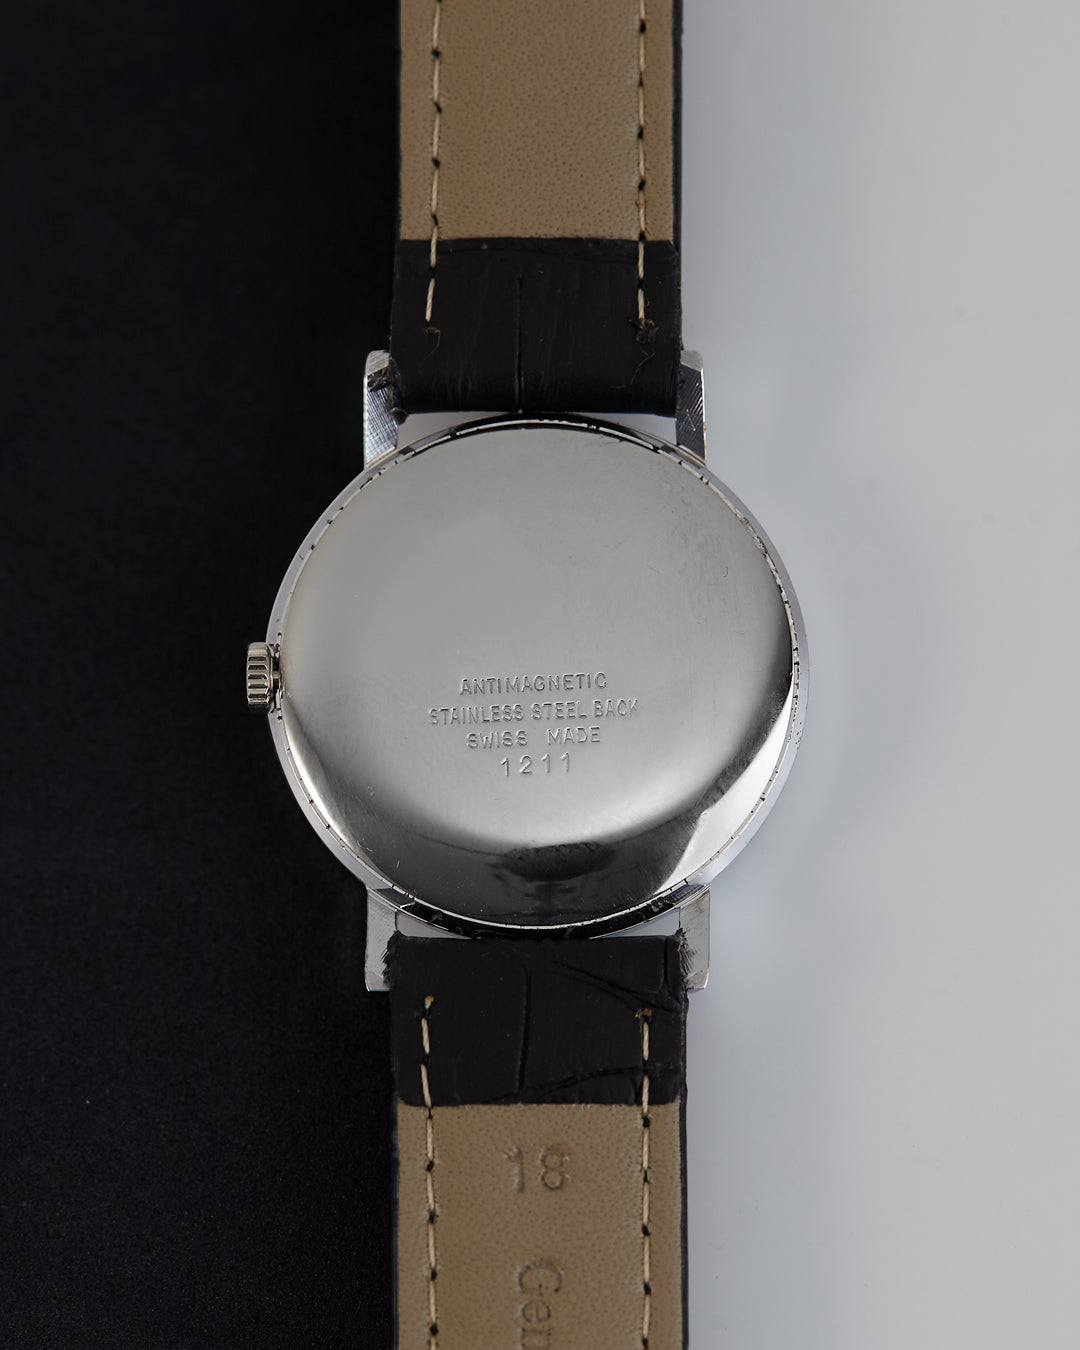 Vulcain Manual-Wind Vintage Wristwatch